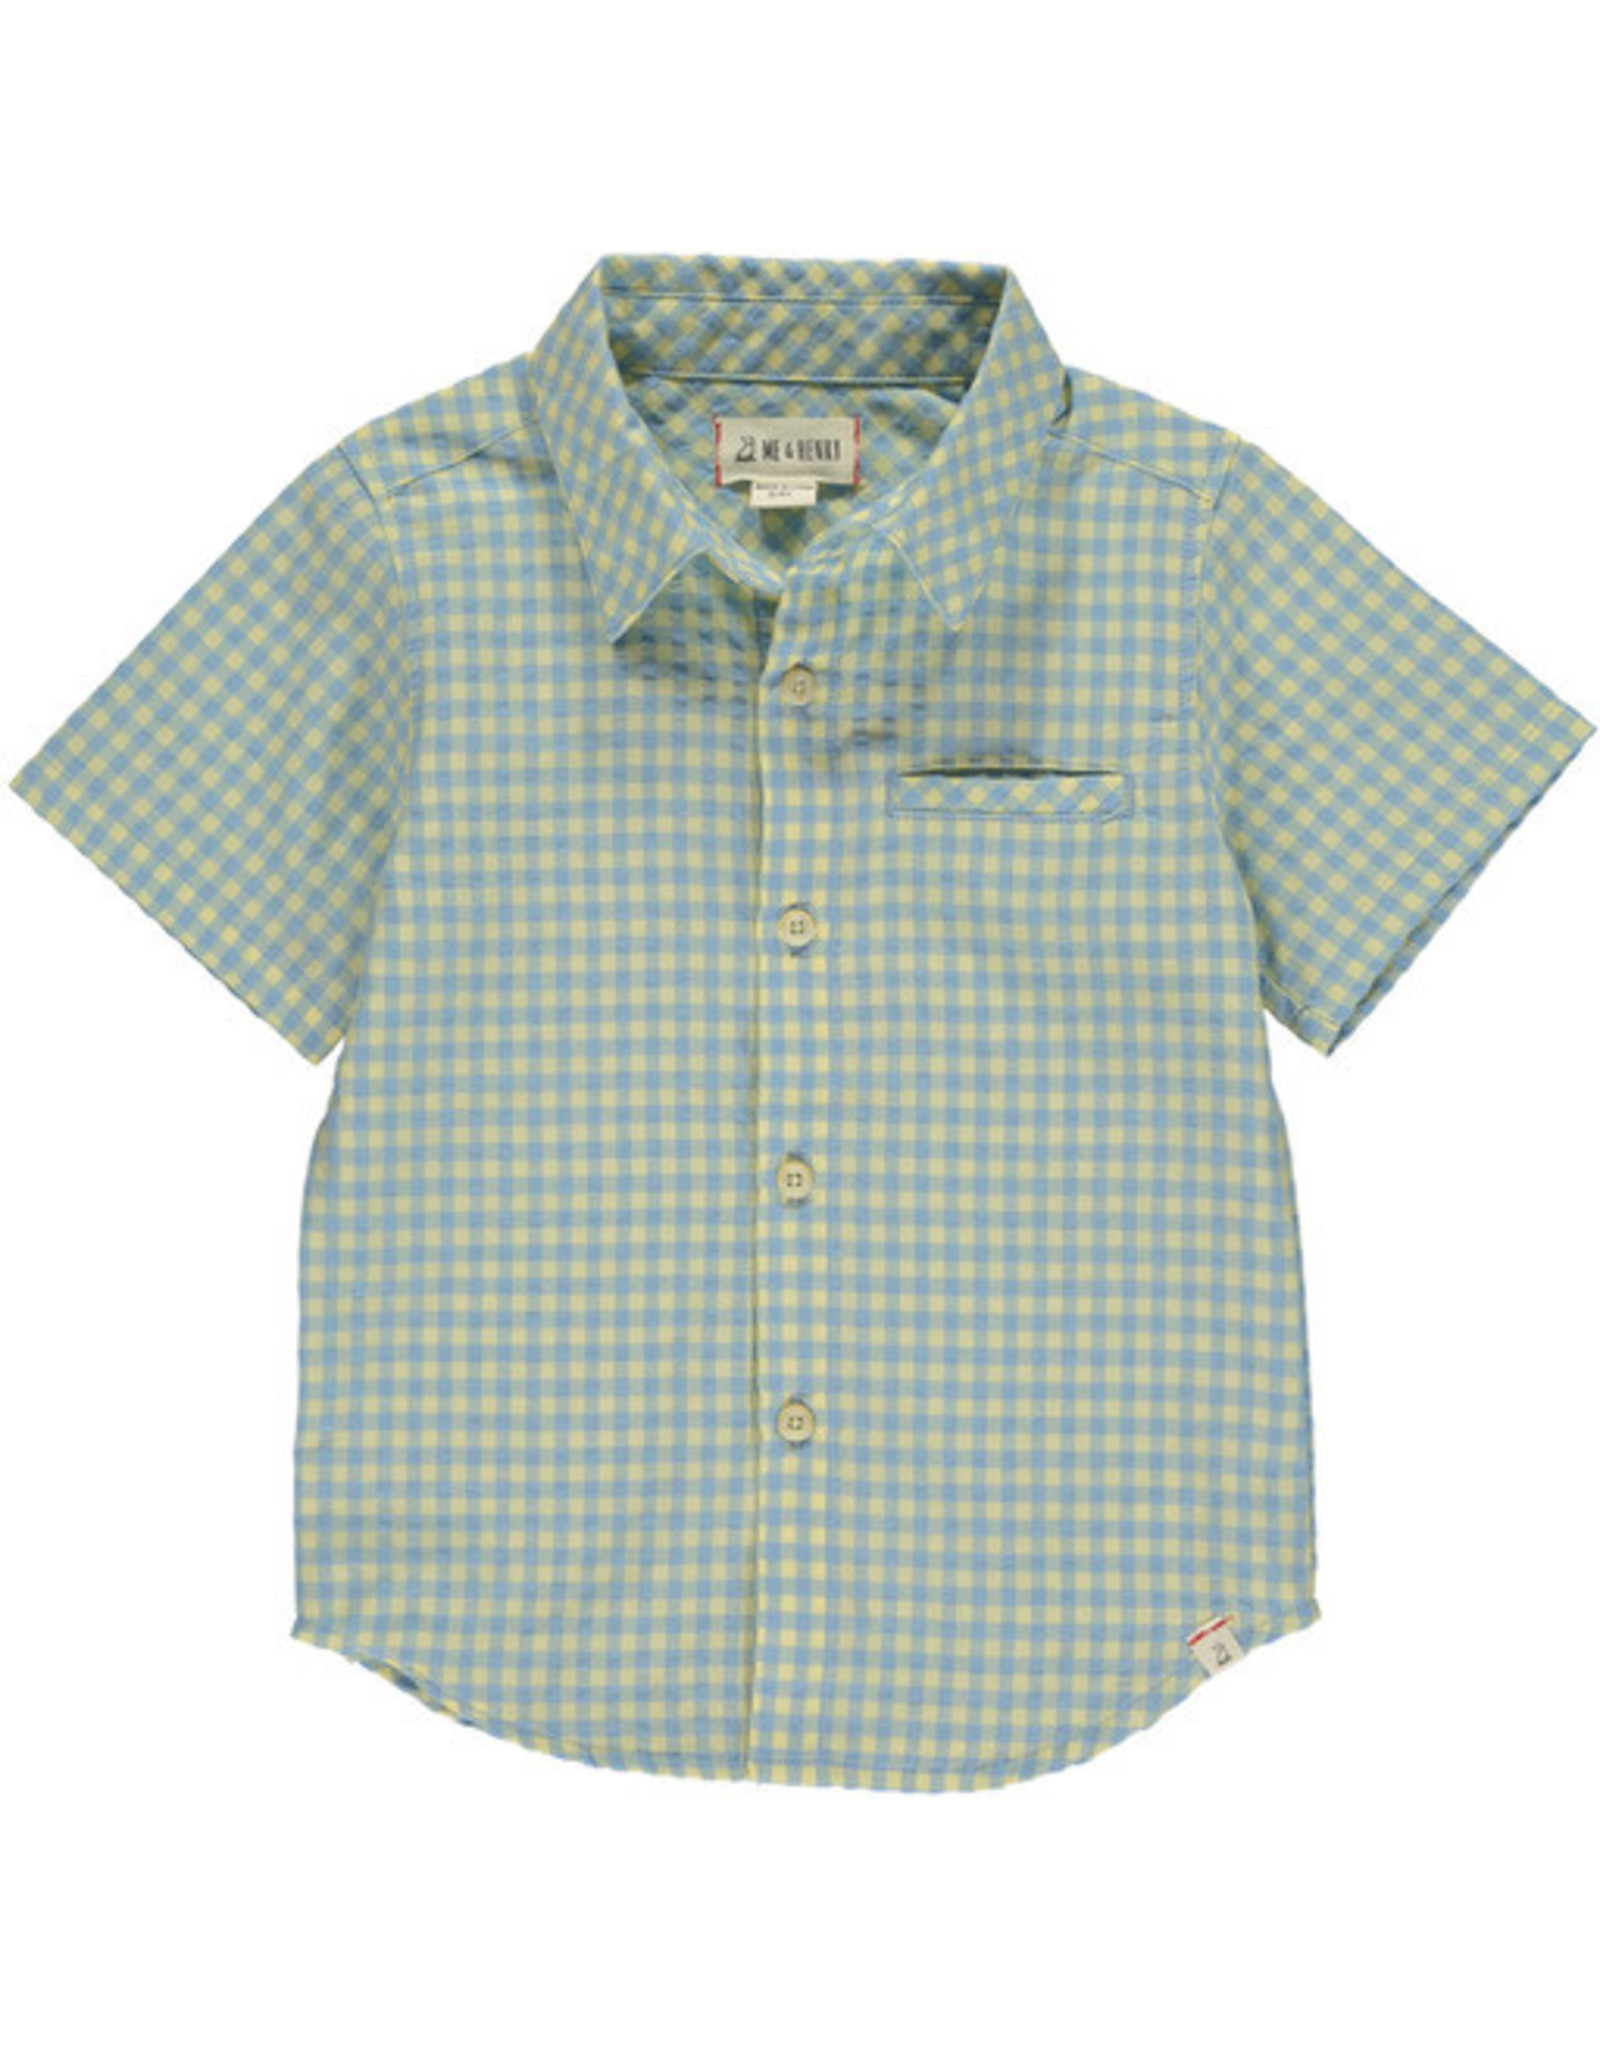 Pier SS Shirt-Lemon/Blue Plaid